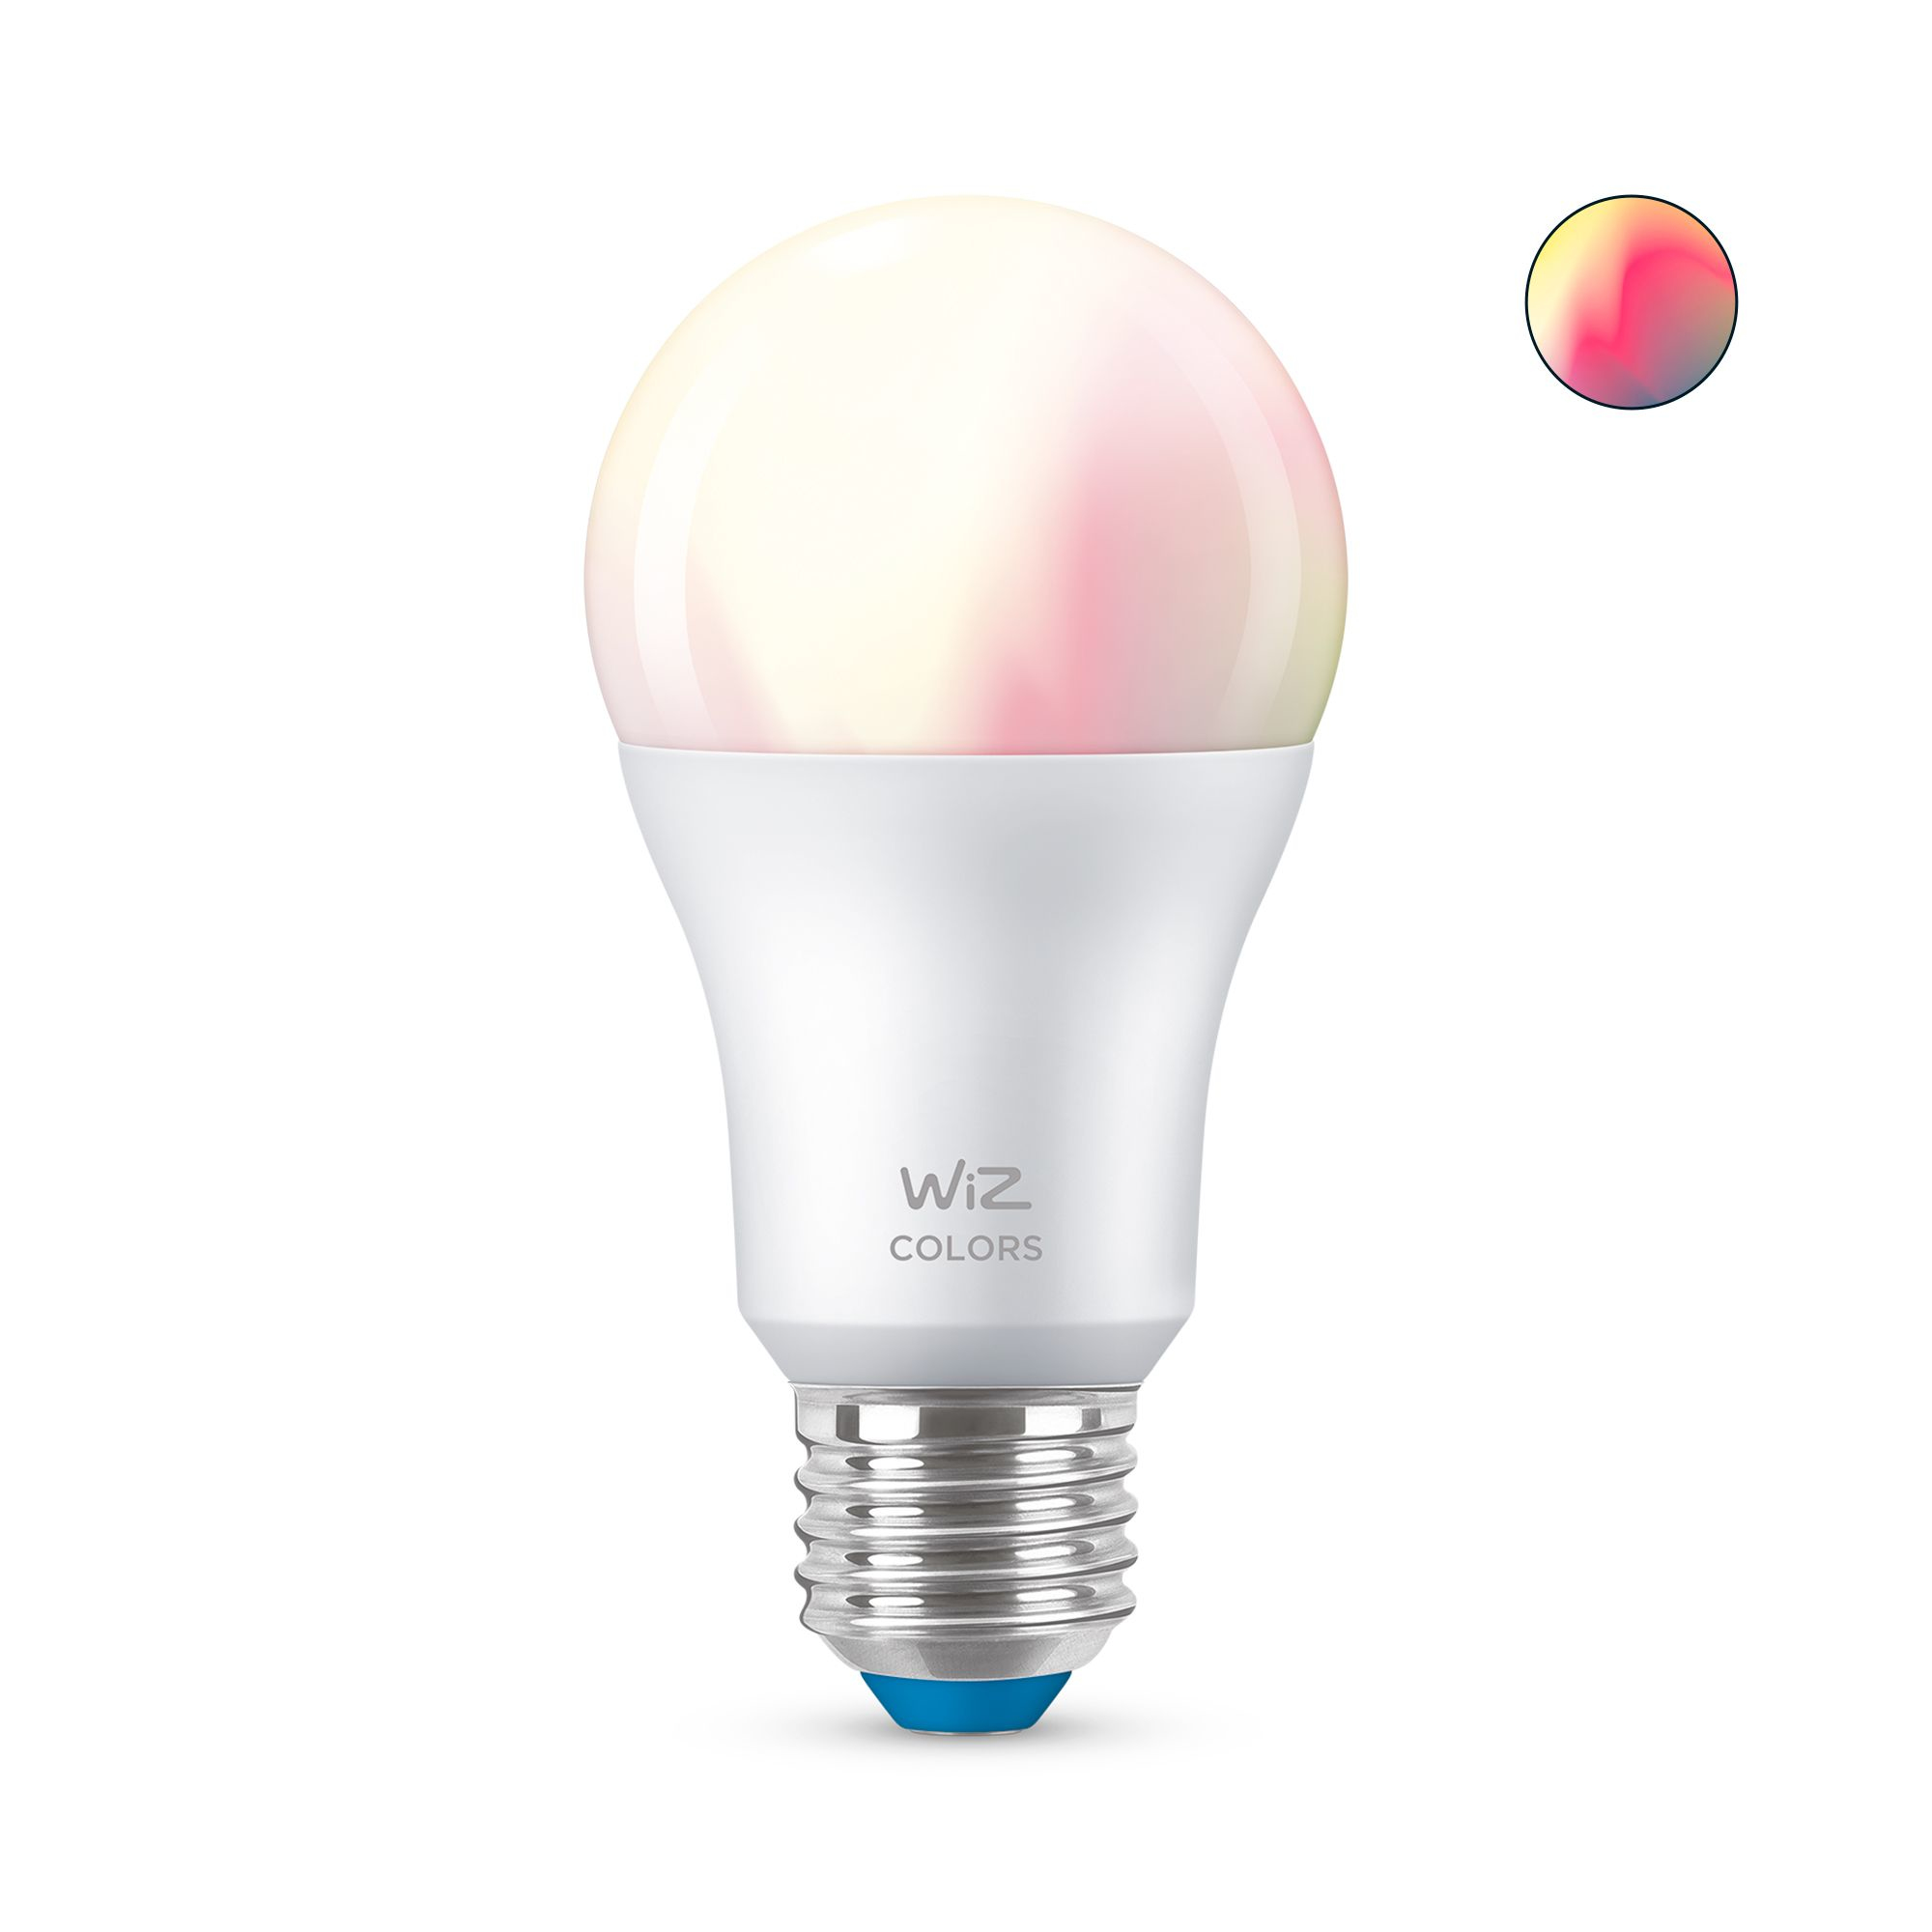 WIZCONNECTED WiZ 8718699787059 - Intelligente Glühbirne - Weiß - WLAN - E27 - Multi - 2200 K